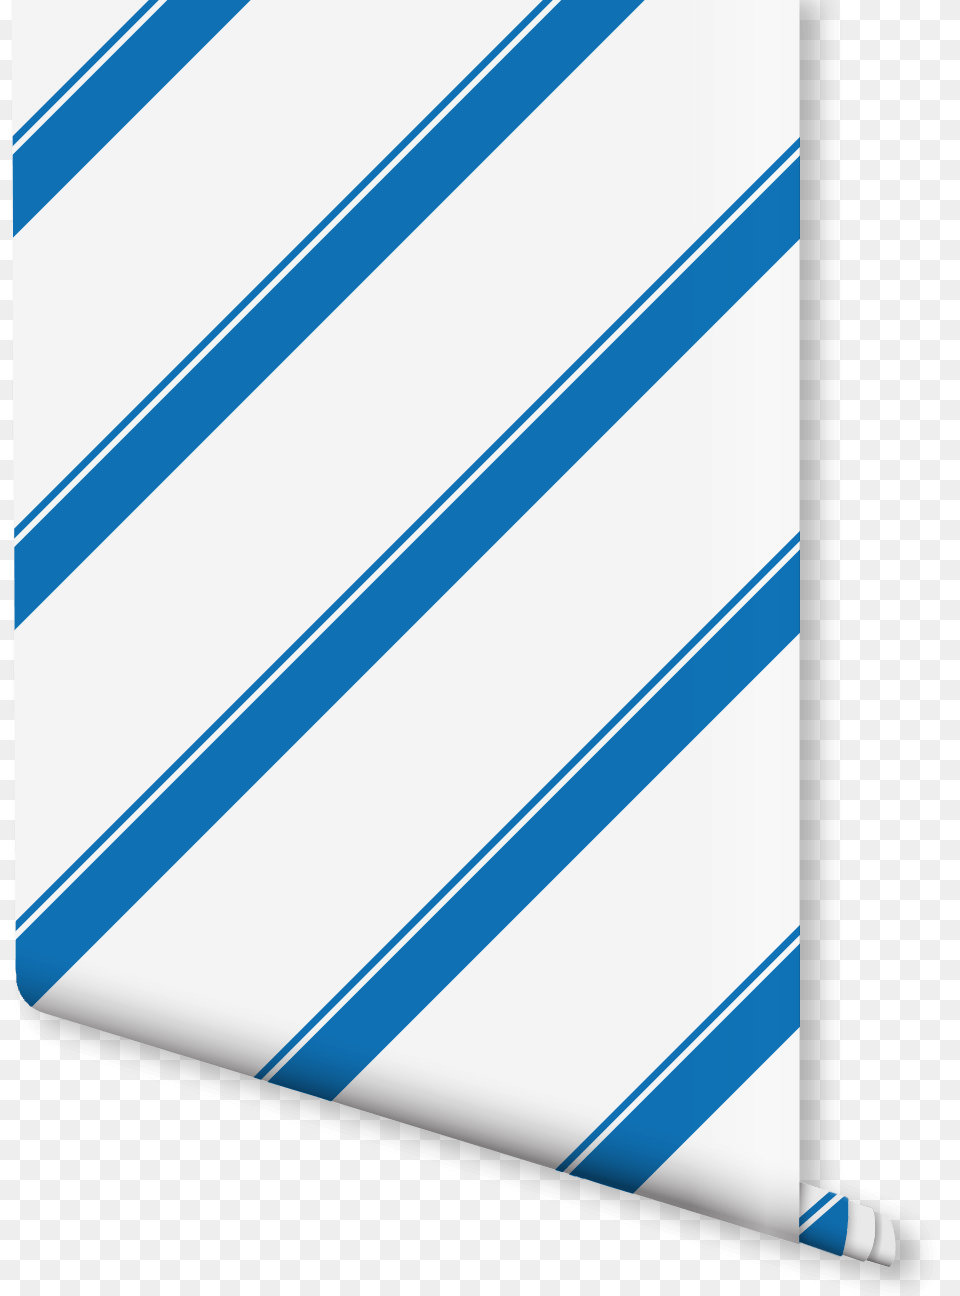 Diagonal Go Faster Stripe Wallpaper Wallpaper, Accessories, Formal Wear, Tie, Fence Png Image